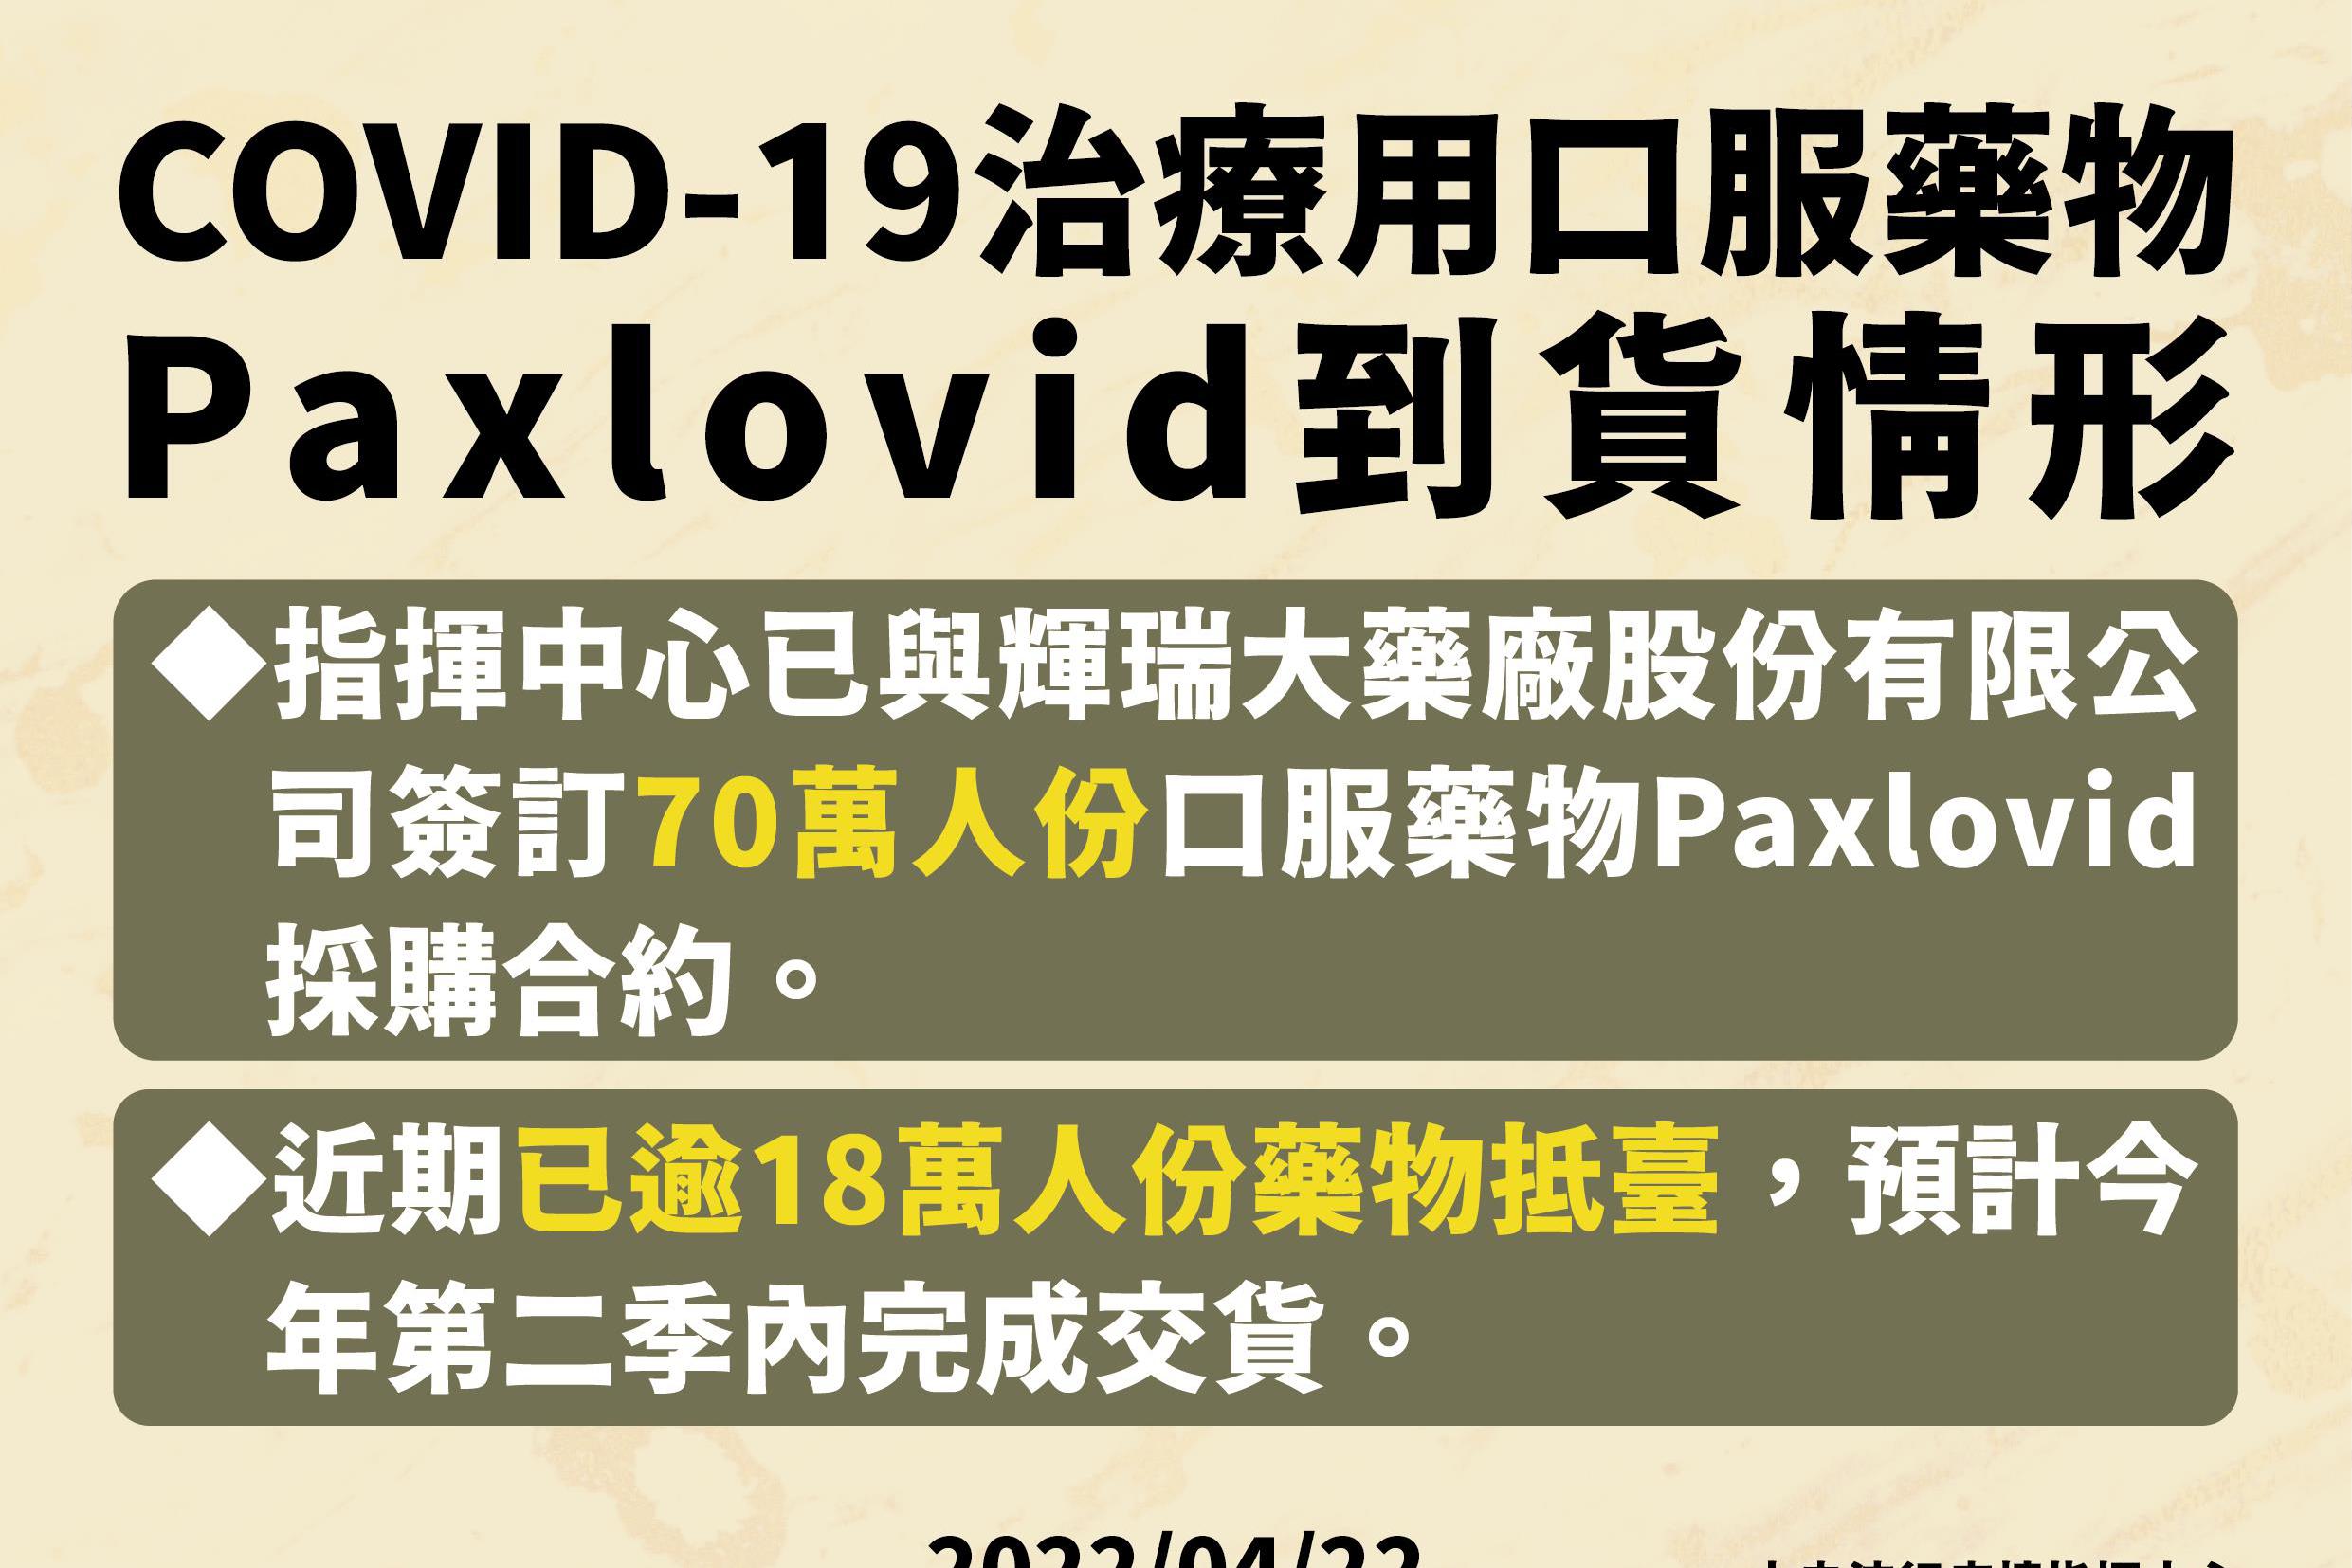 Re: [問卦] Paxlovid只買37萬份 是不是買太少了